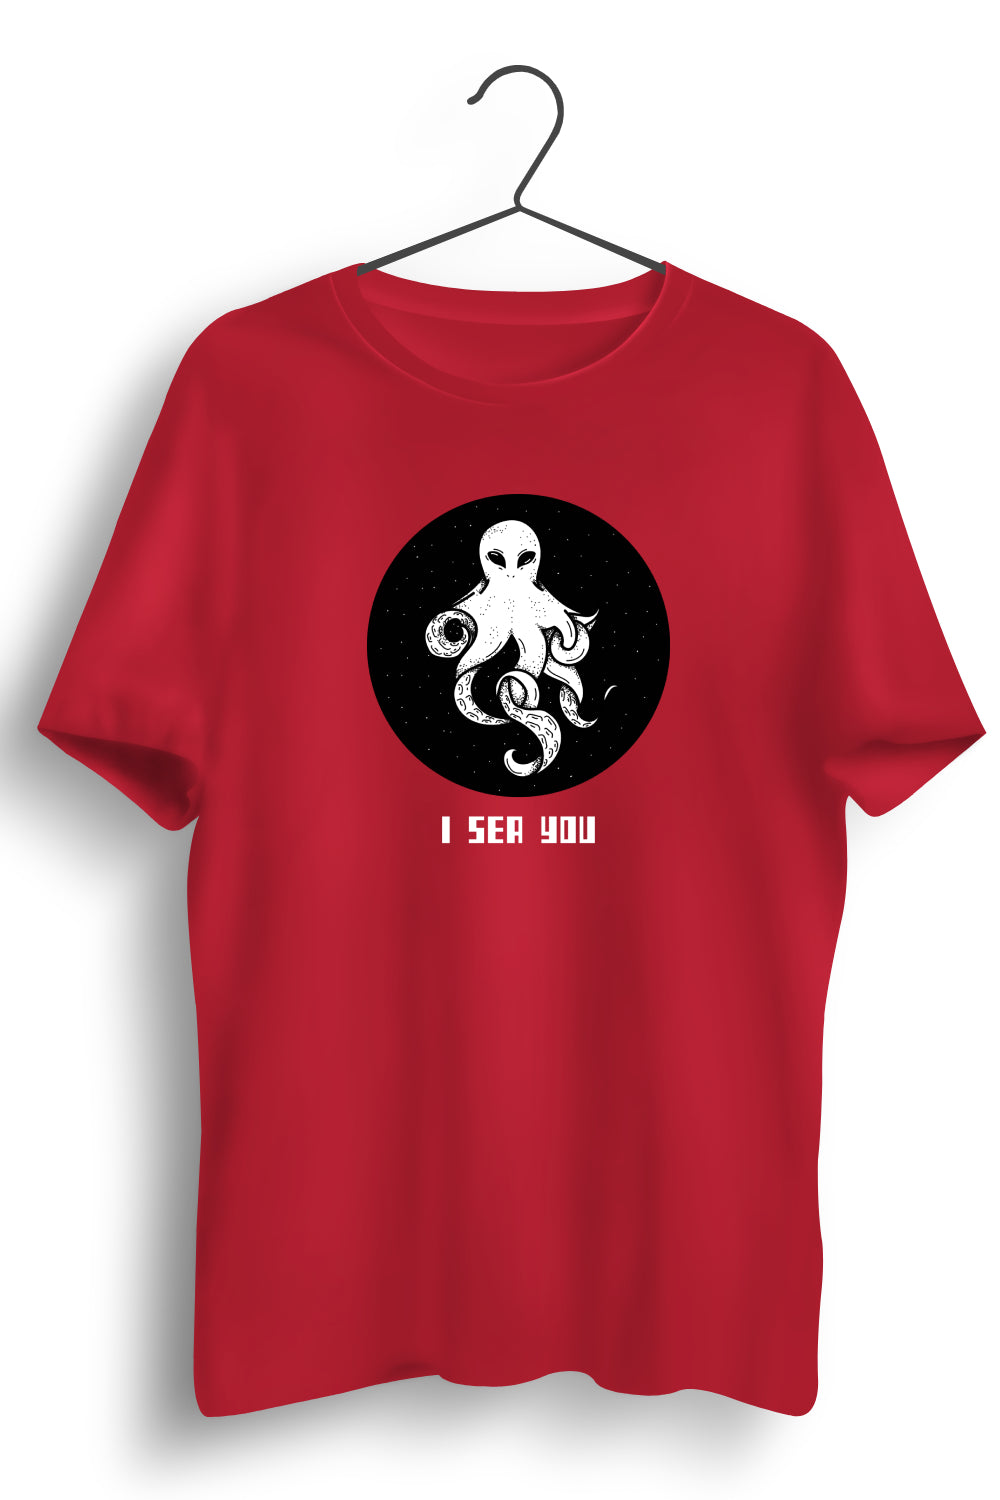 I Sea You Graphic Printed Red Tshirt